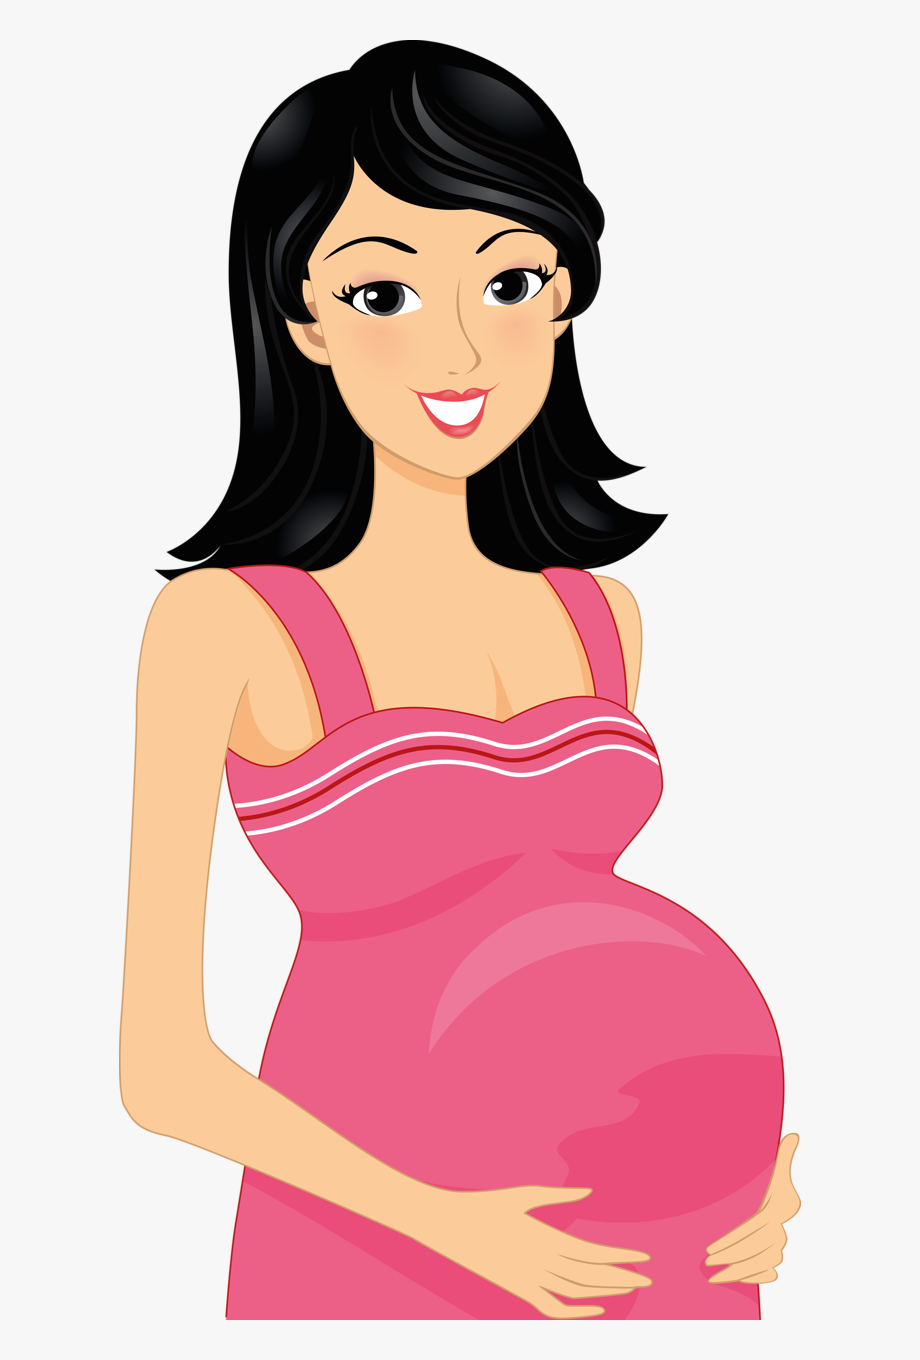 Women in . Pregnancy clipart pregnant family